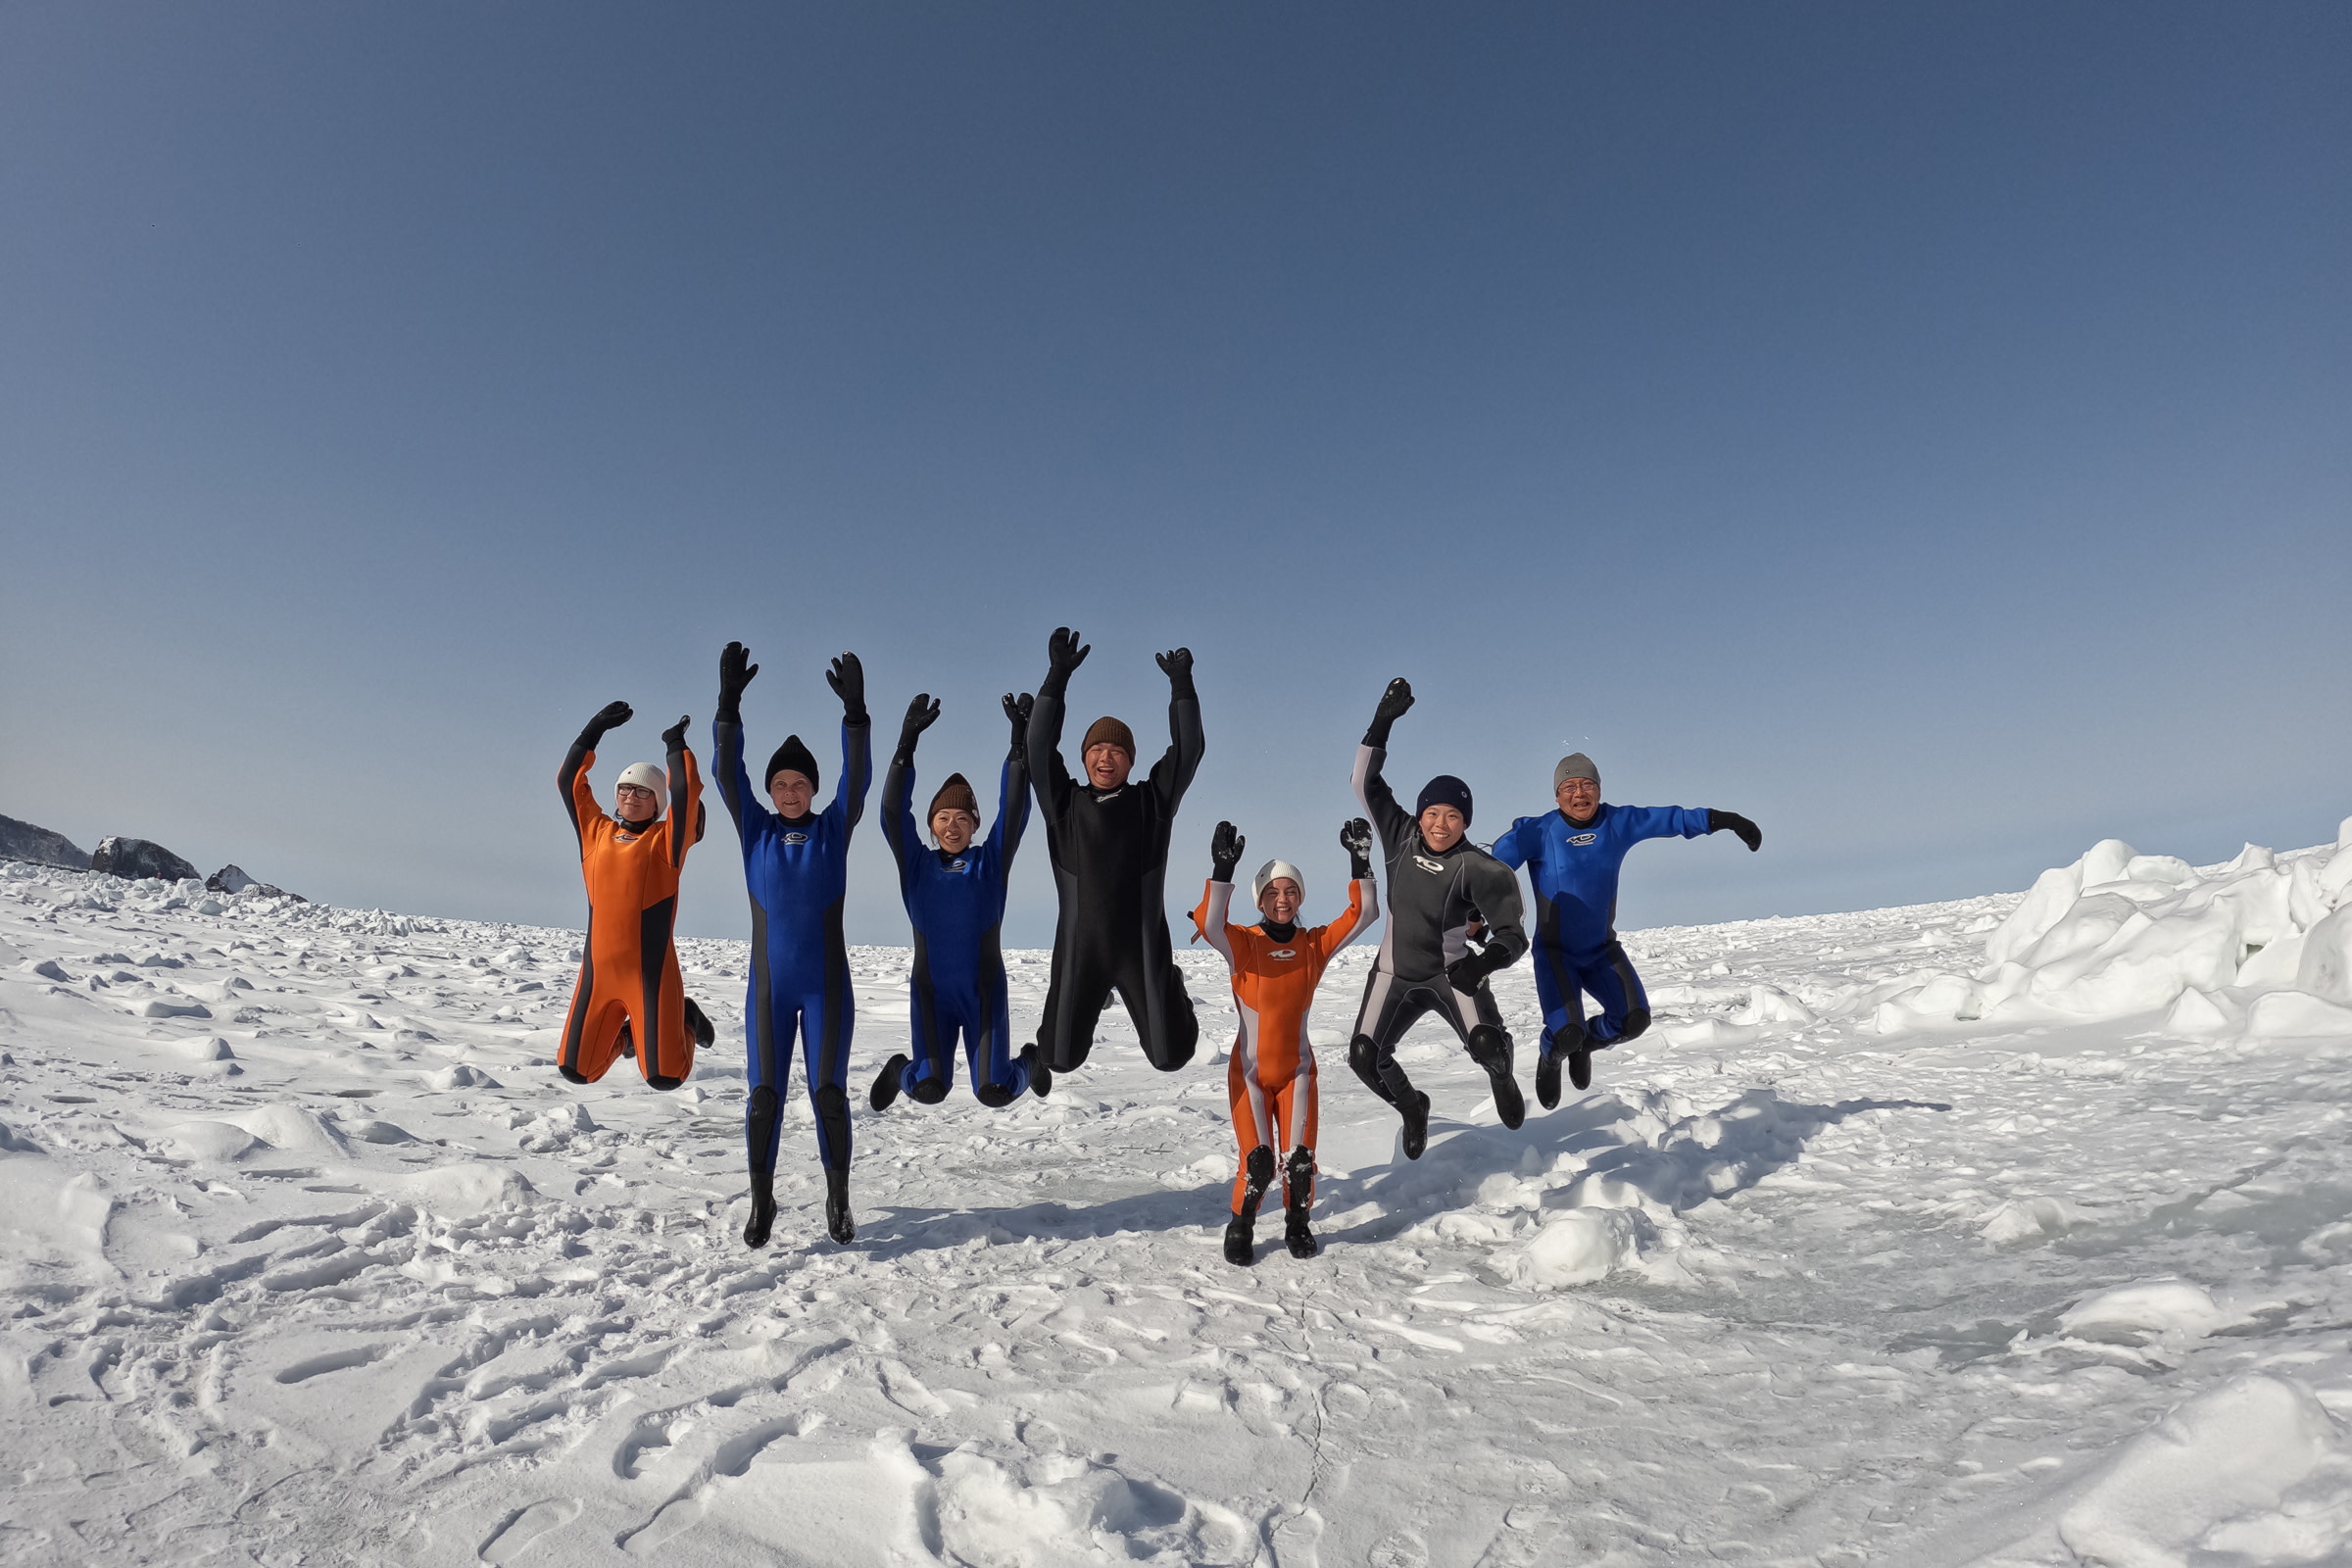 Guests jump for joy on drift ice at Shiretoko Peninsula.